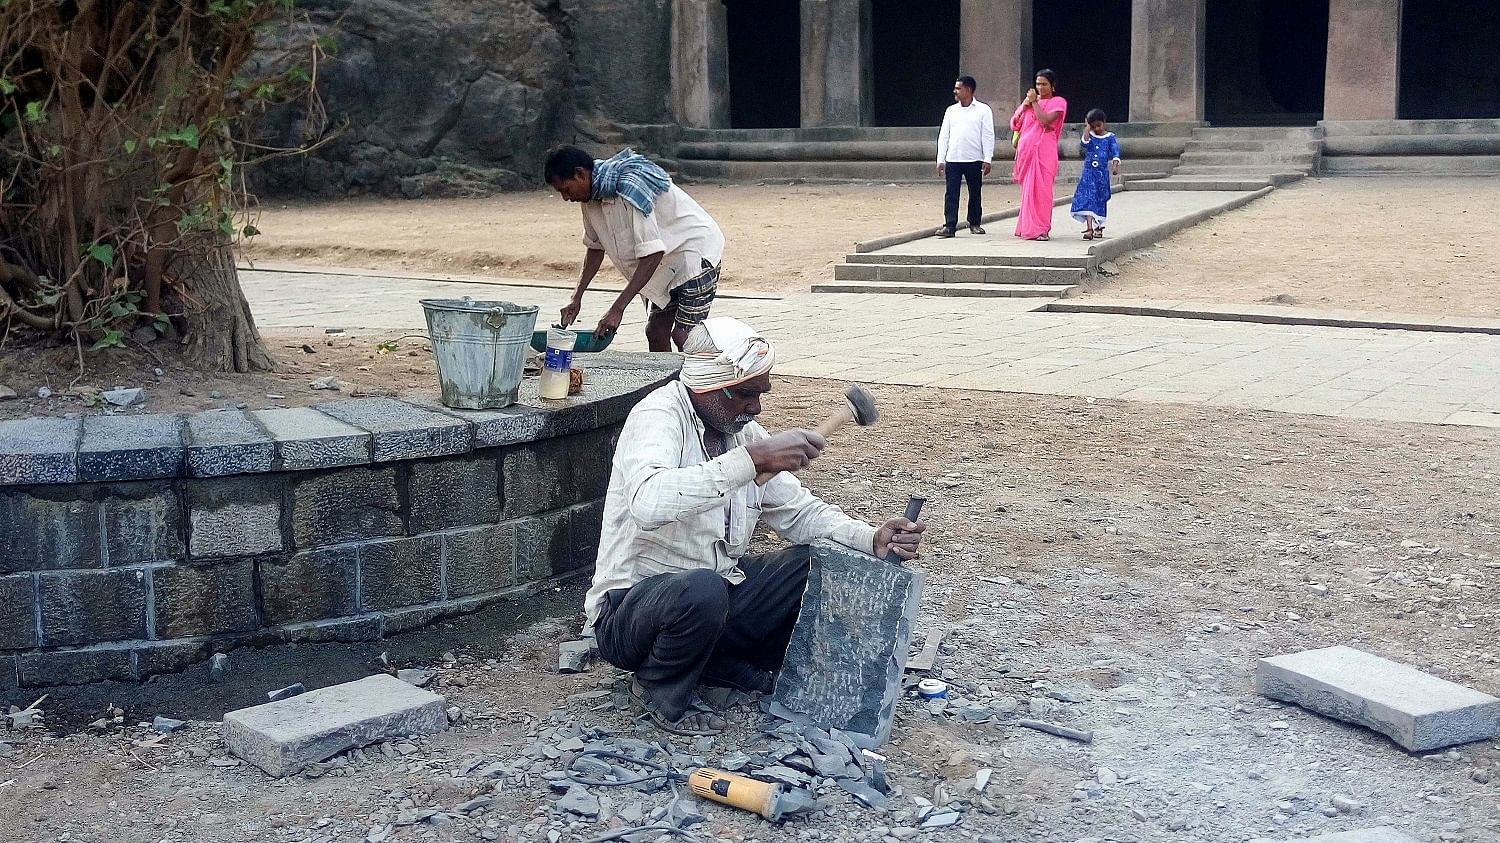 Wadar artistes working around the clock near Elephanta Island, near Mumbai.